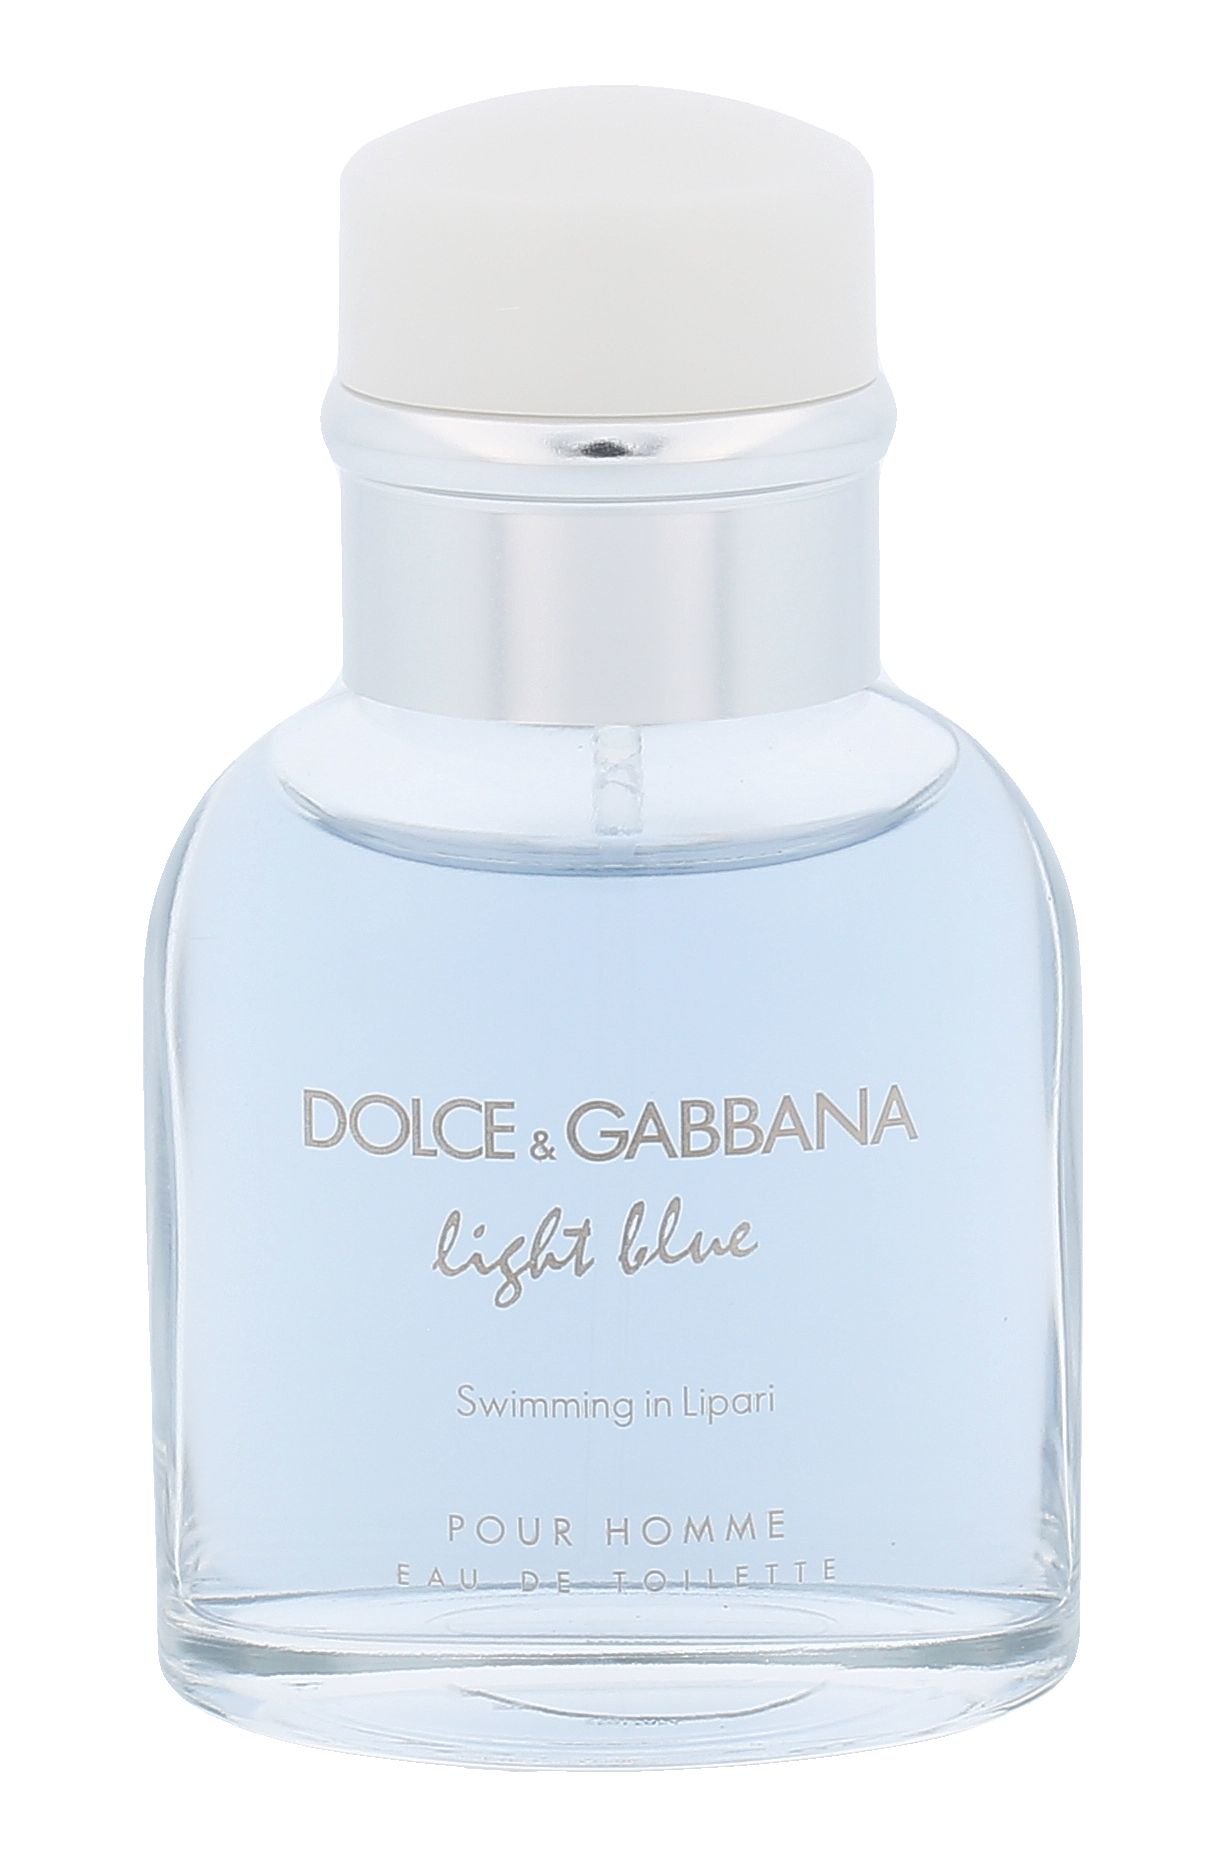 Dolce&Gabbana Light Blue Swimming in Lipari Pour Homme, Toaletní voda 40ml